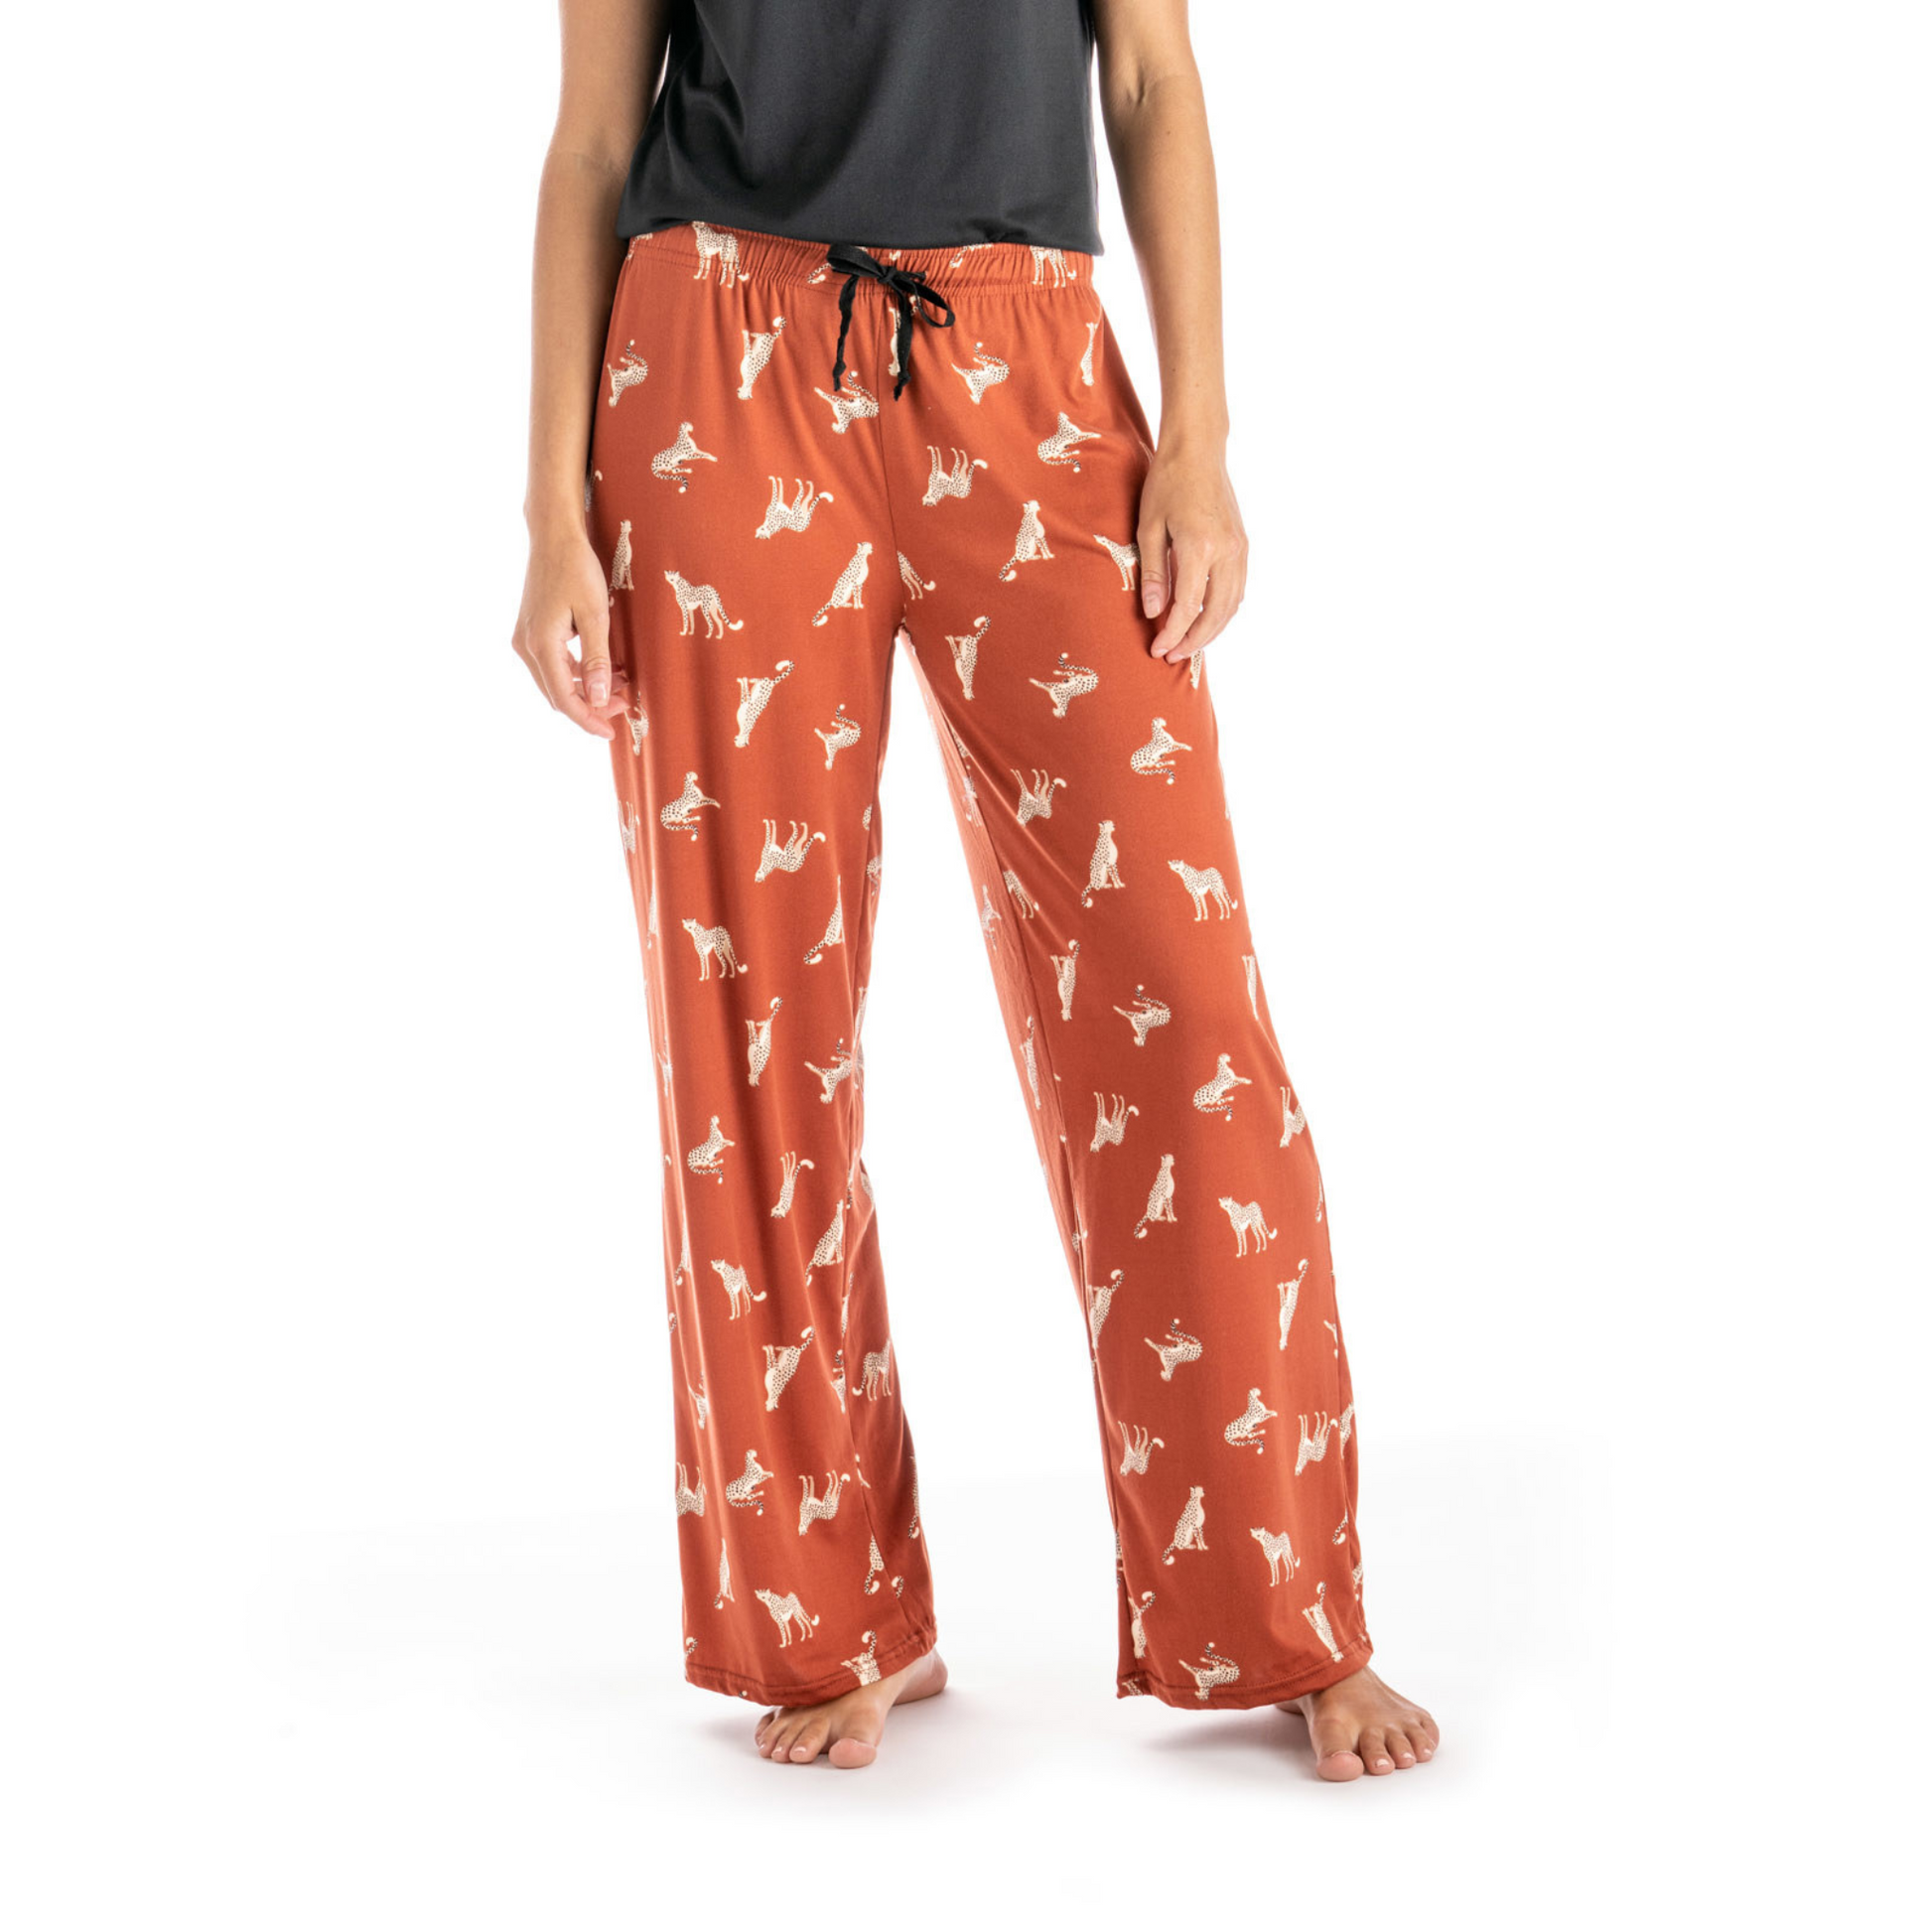 super soft orange loungewear pants with cheetah graphics and drawstring